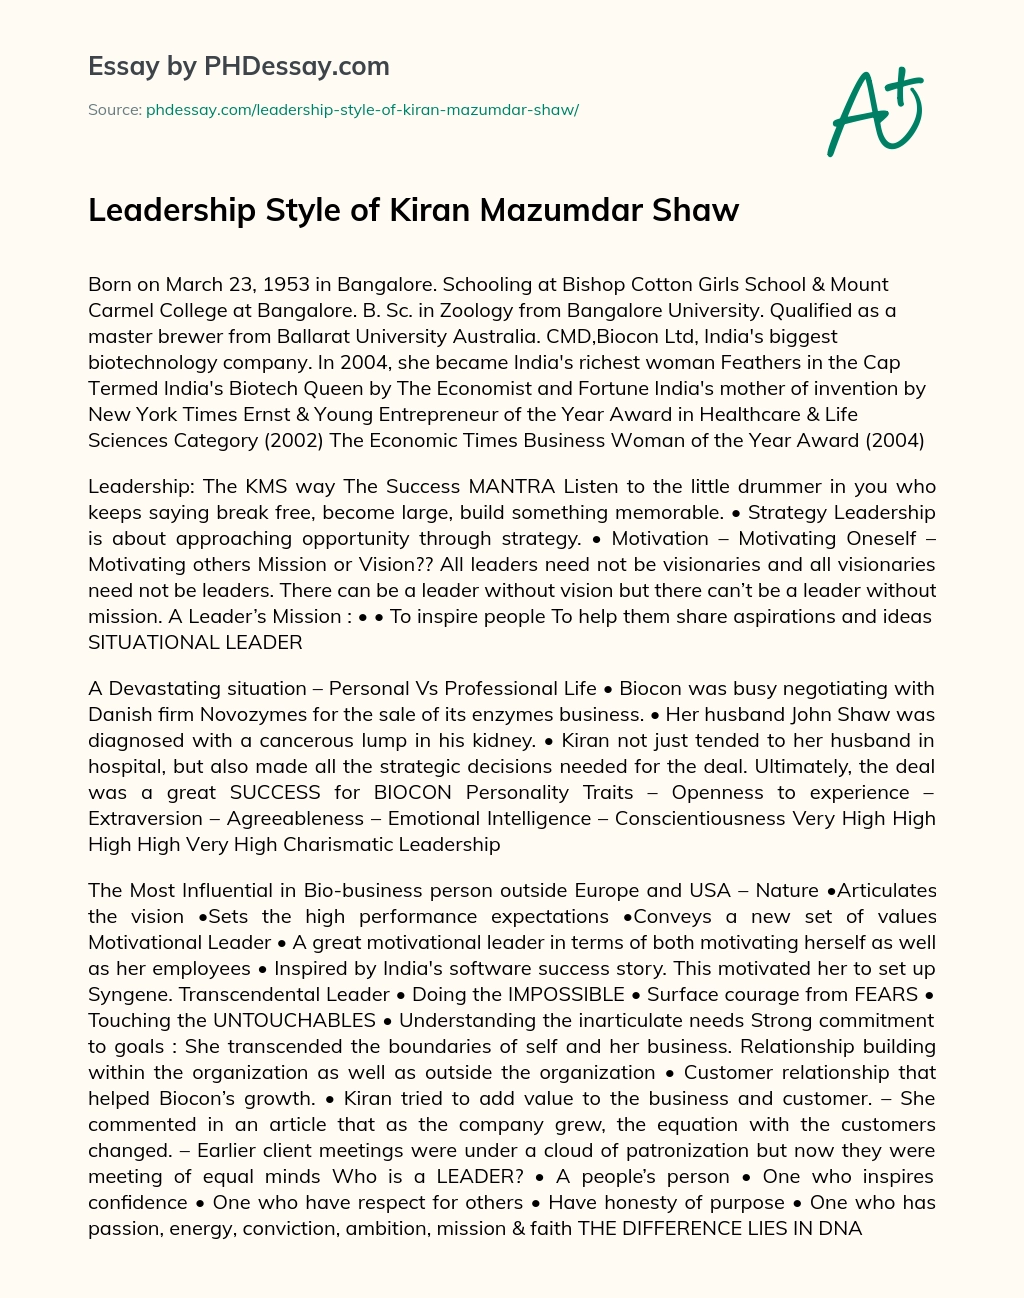 Leadership Style of Kiran Mazumdar Shaw essay